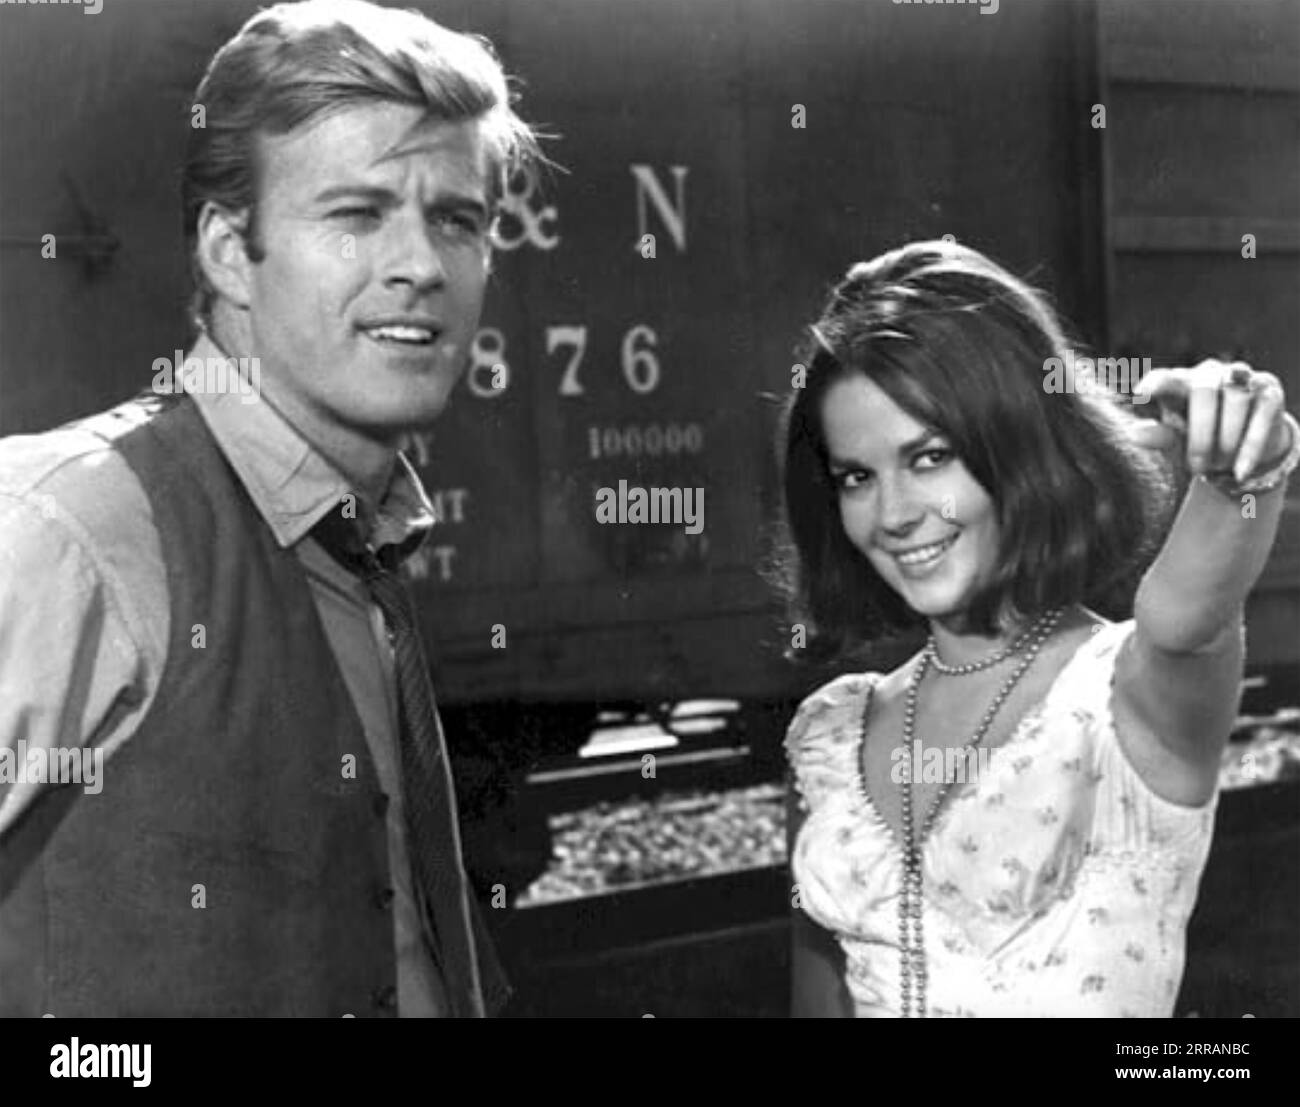 INSIDE DAISY CLOVER 1965 Warner Bros. Film con Natalie Wood e Robert Redford Foto Stock